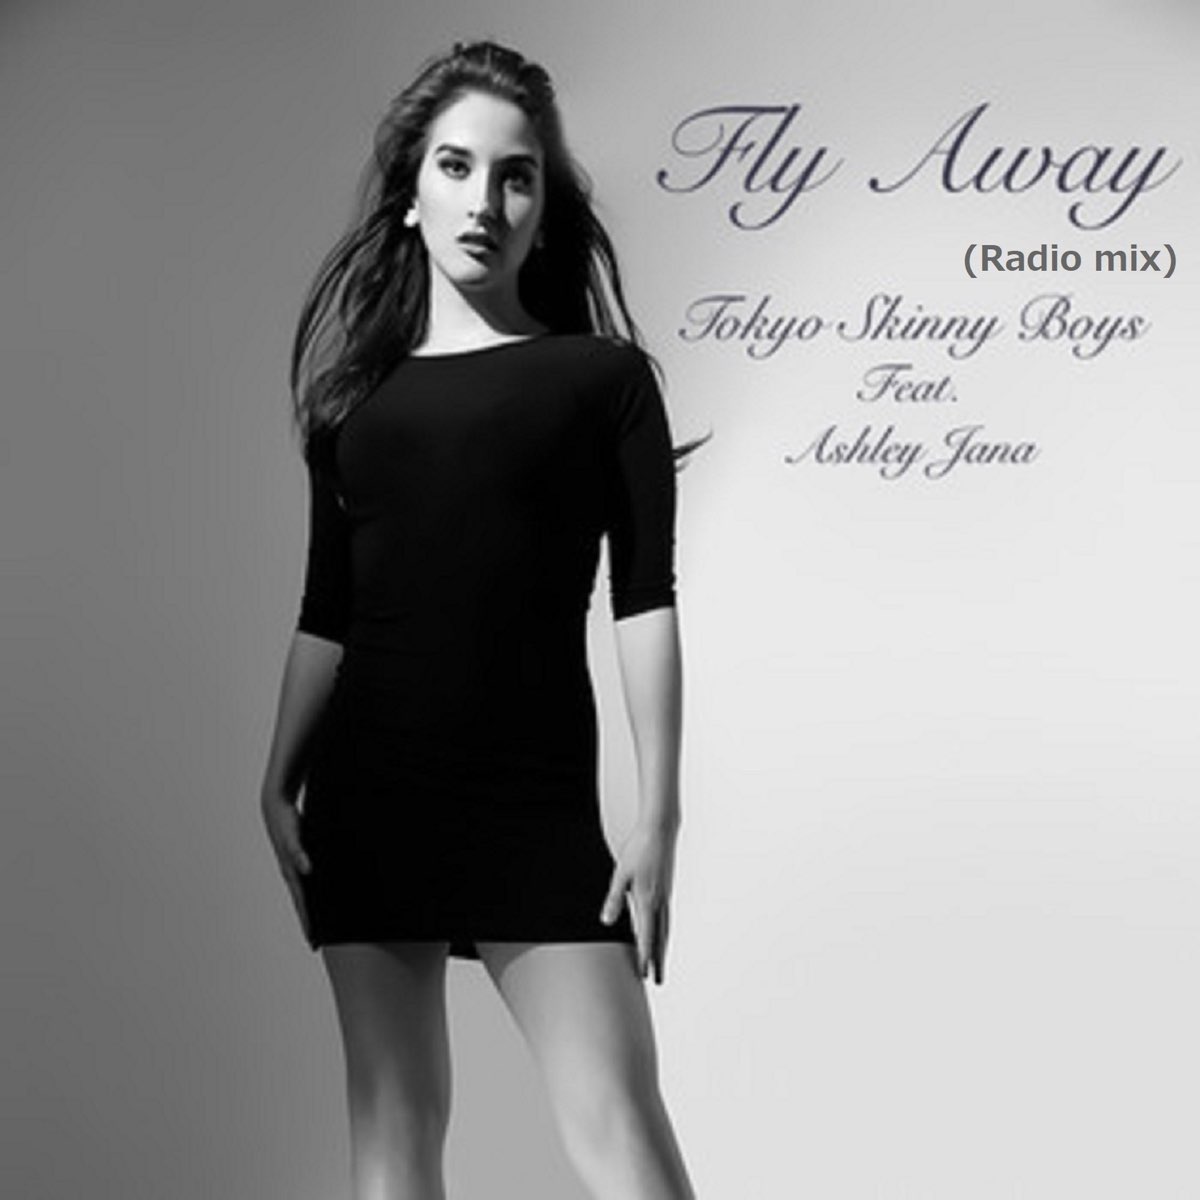 Fly Away(Radio mix) [feat. Ashley Jana] - Single - Album by Tokyo Skinny  Boys - Apple Music